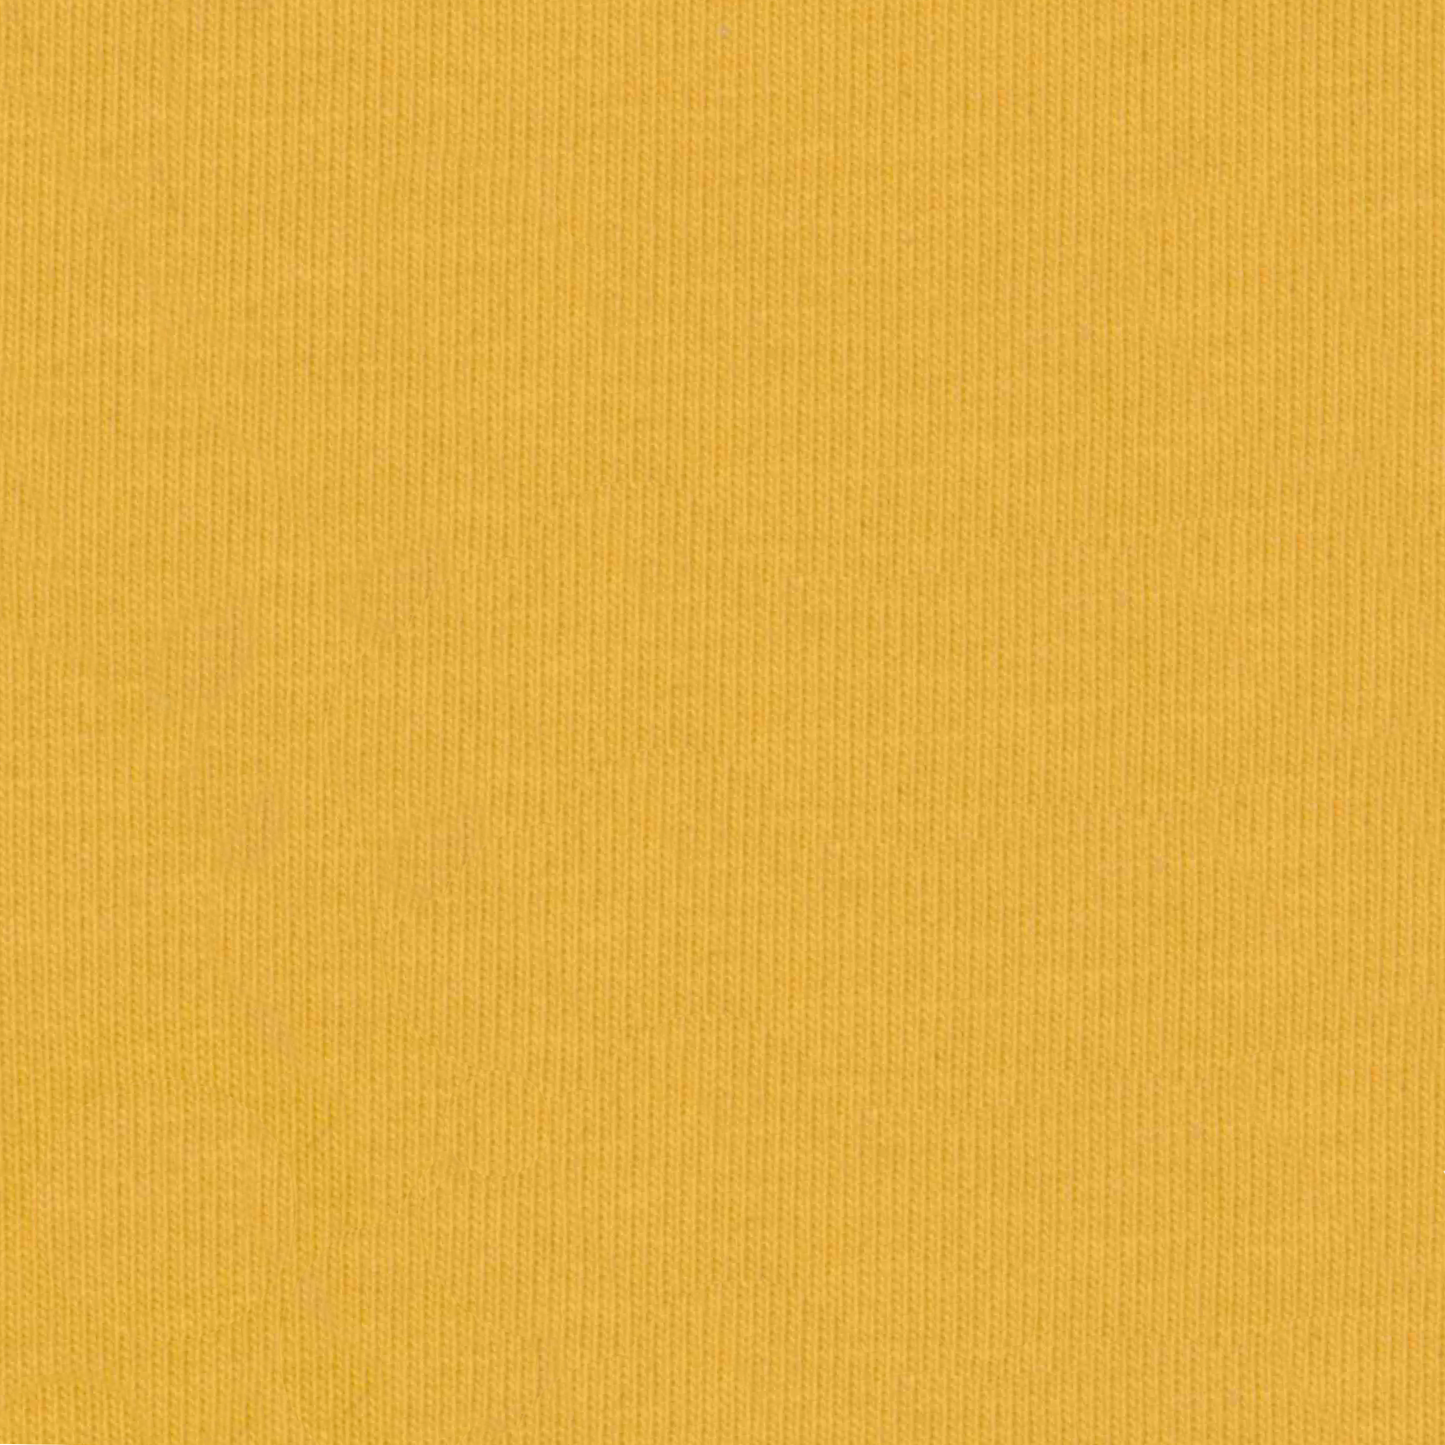 95% Organic Cotton, 5% Elastane Single Jersey - Honey Yellow (2SP060)